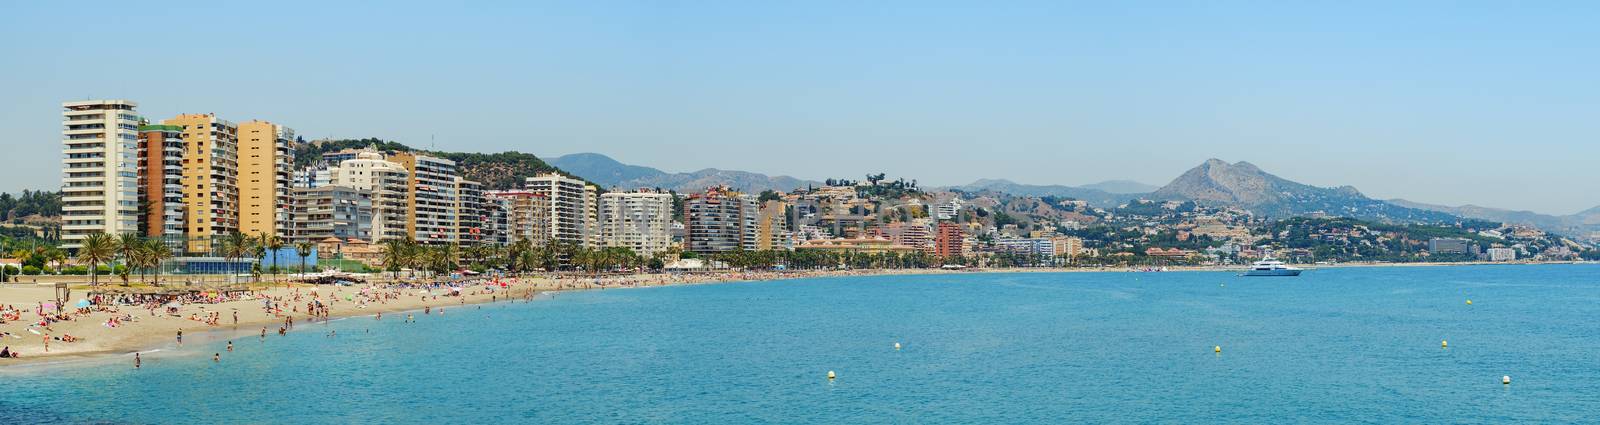 Malaga, Spain - June 26, 2018. Panoramic view over the Malagueta beach on a clear day, Malaga city, Costa del Sol, Malaga Province, Andalucia, Spain, Western Europe